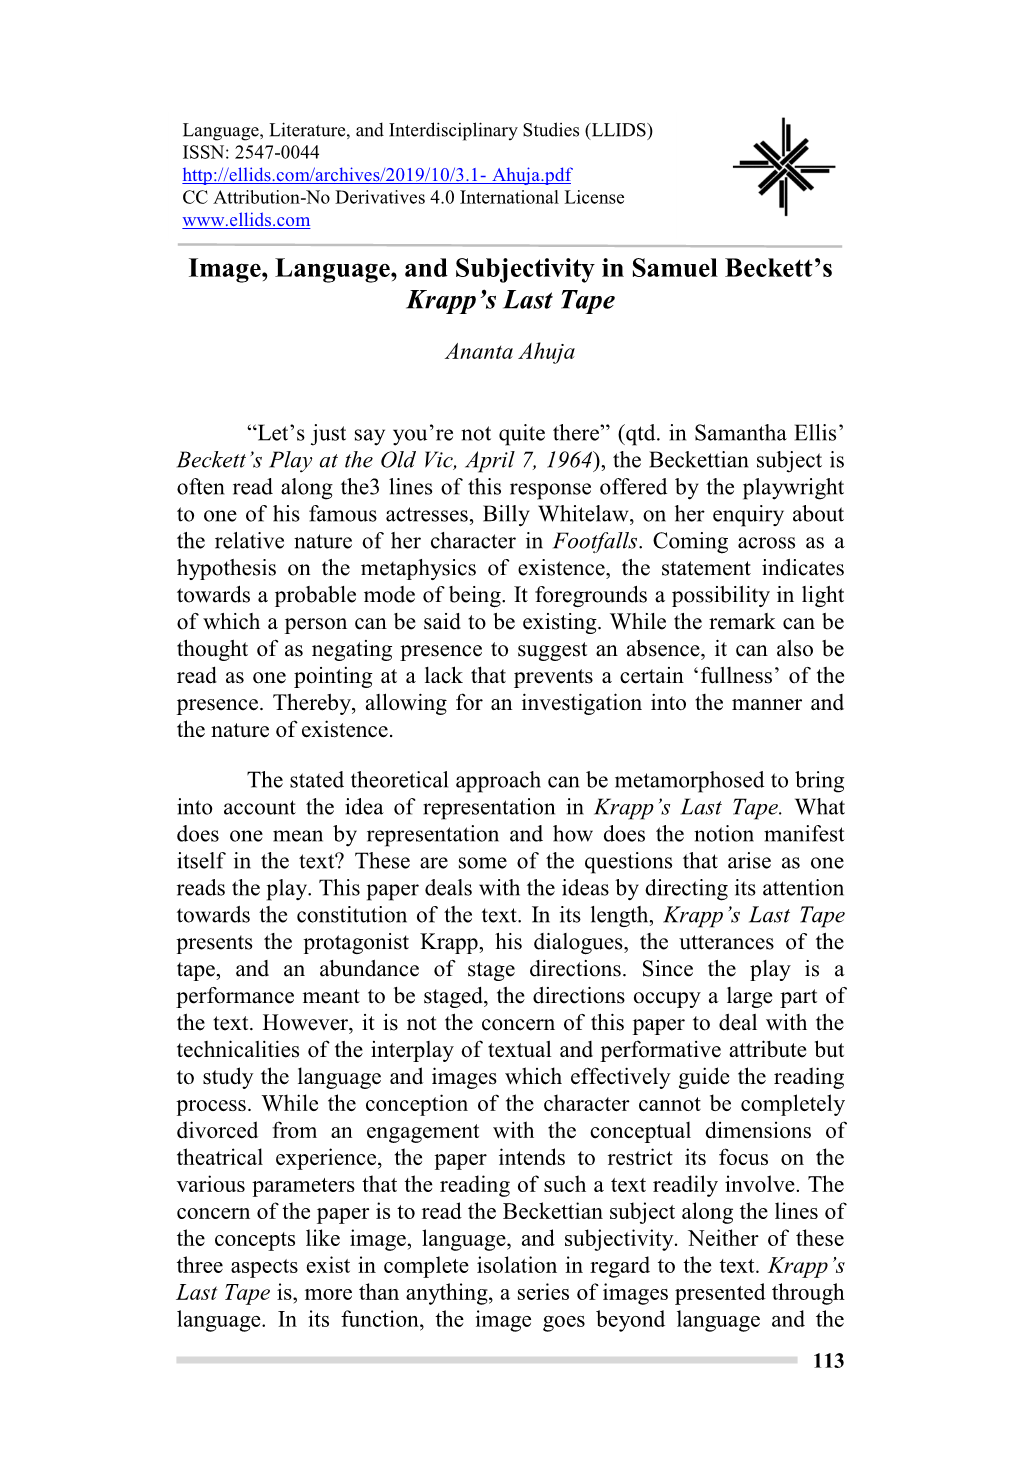 Image, Language, and Subjectivity in Samuel Beckett's Krapp's Last Tape